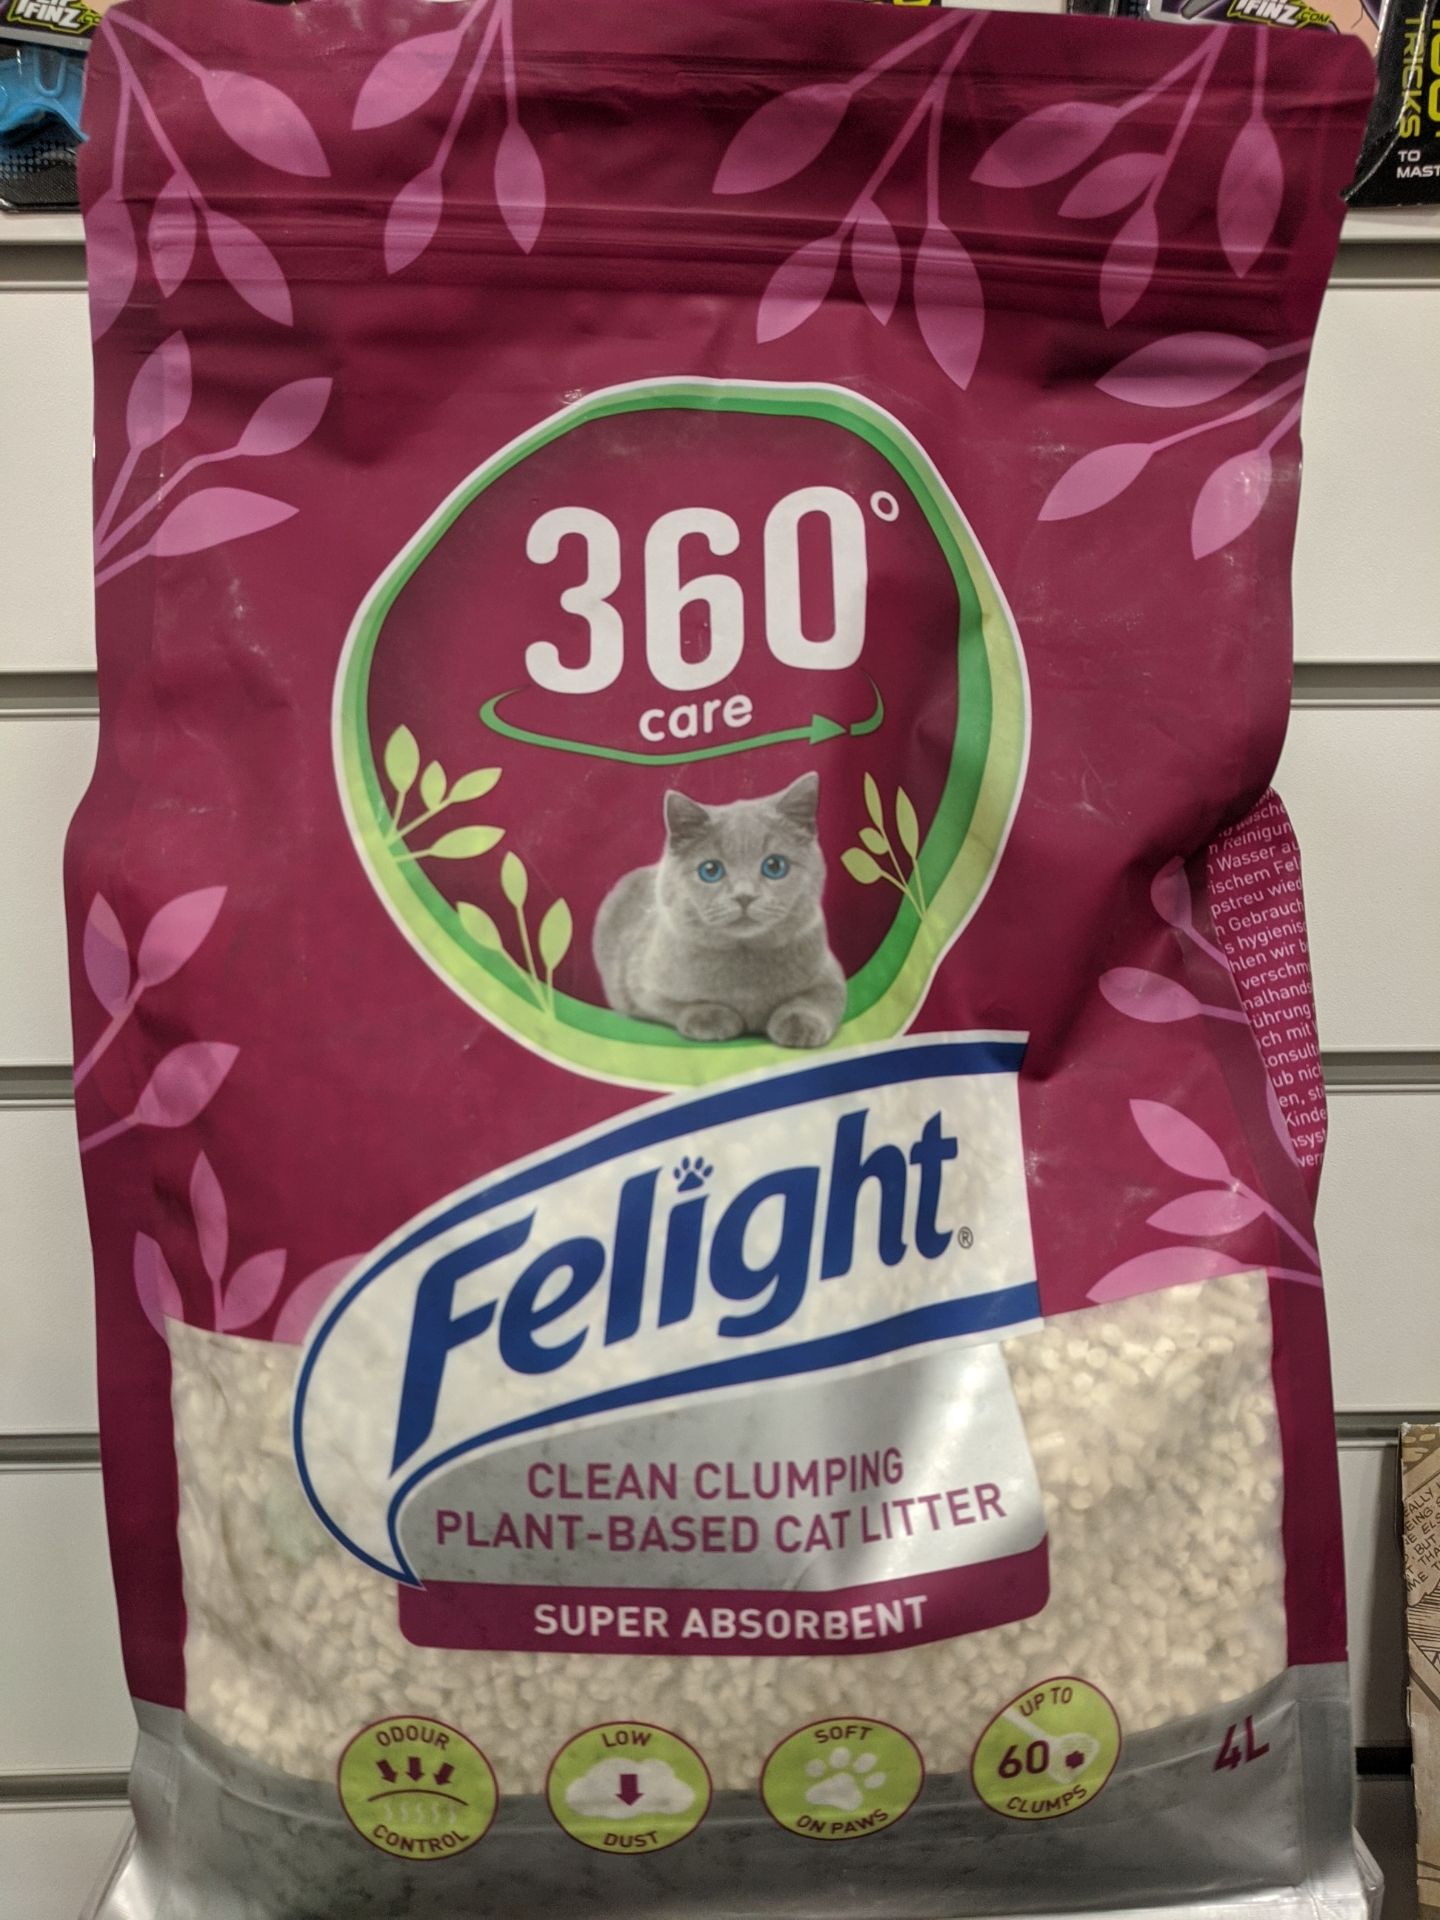 100 x Brand New Felight 360 Care Plant Based Cat Litter | 4 L | Total RRP £1,000